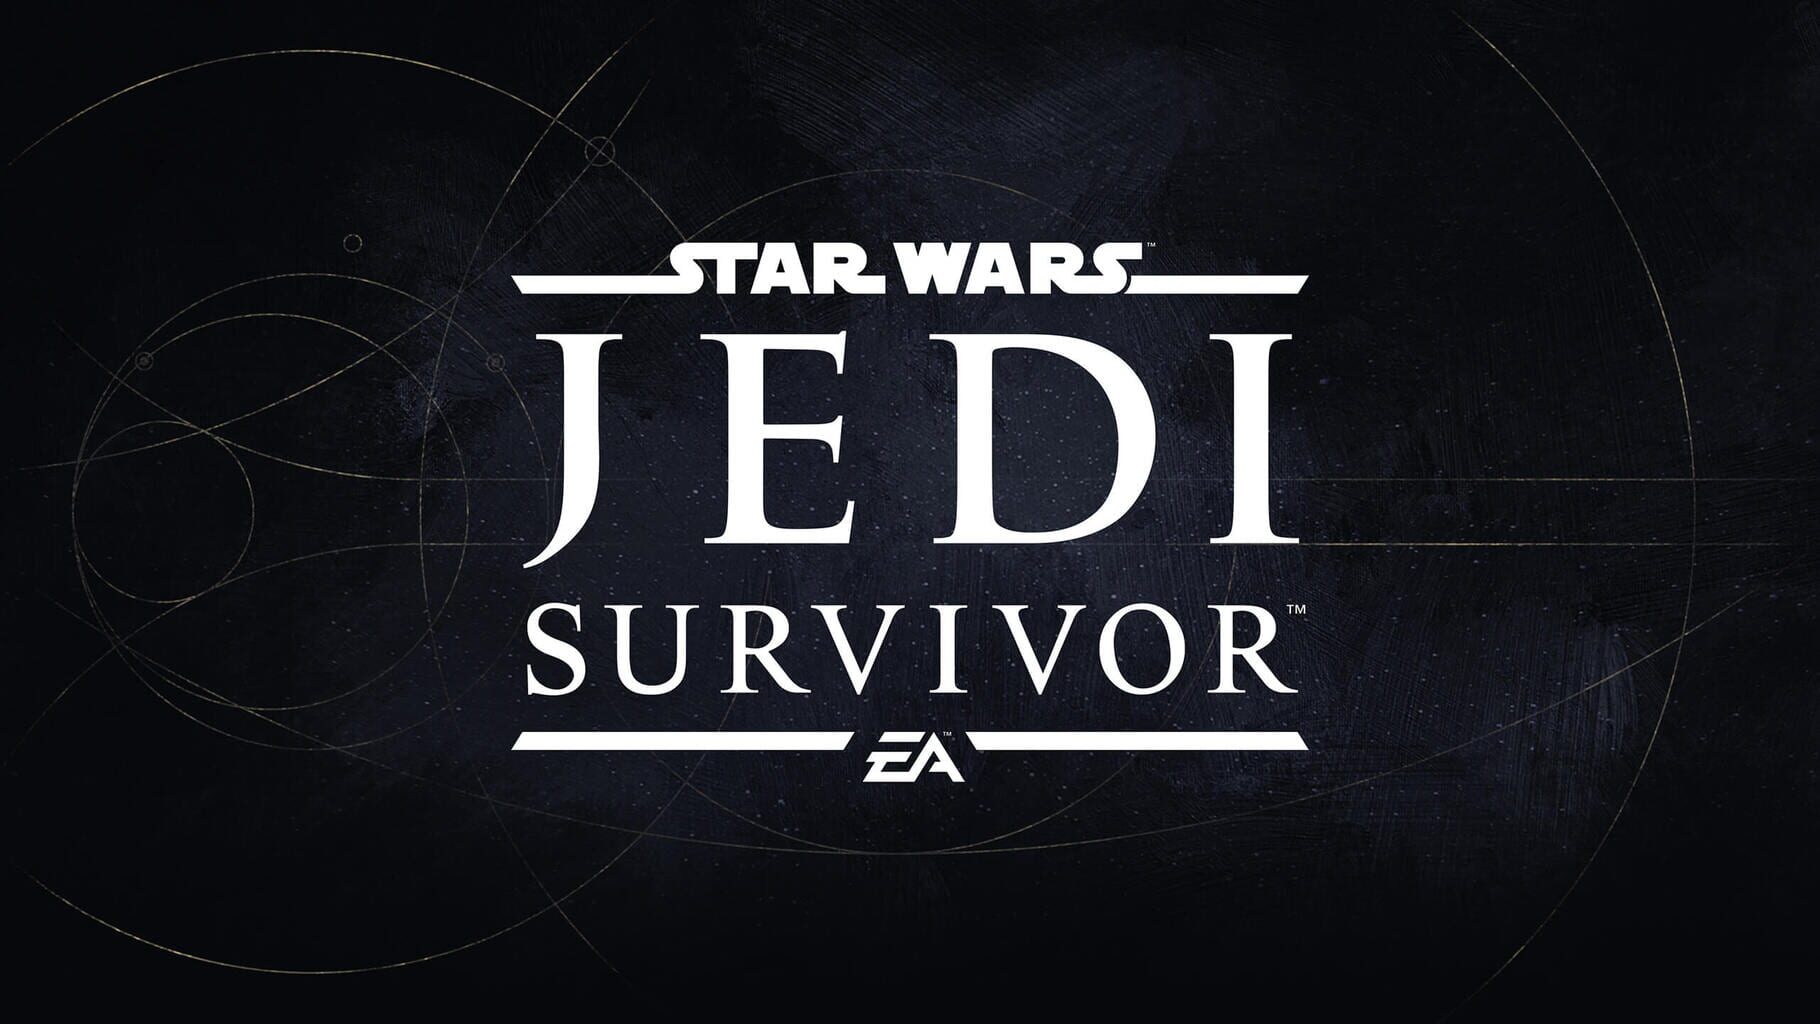 Artwork for Star Wars Jedi: Survivor